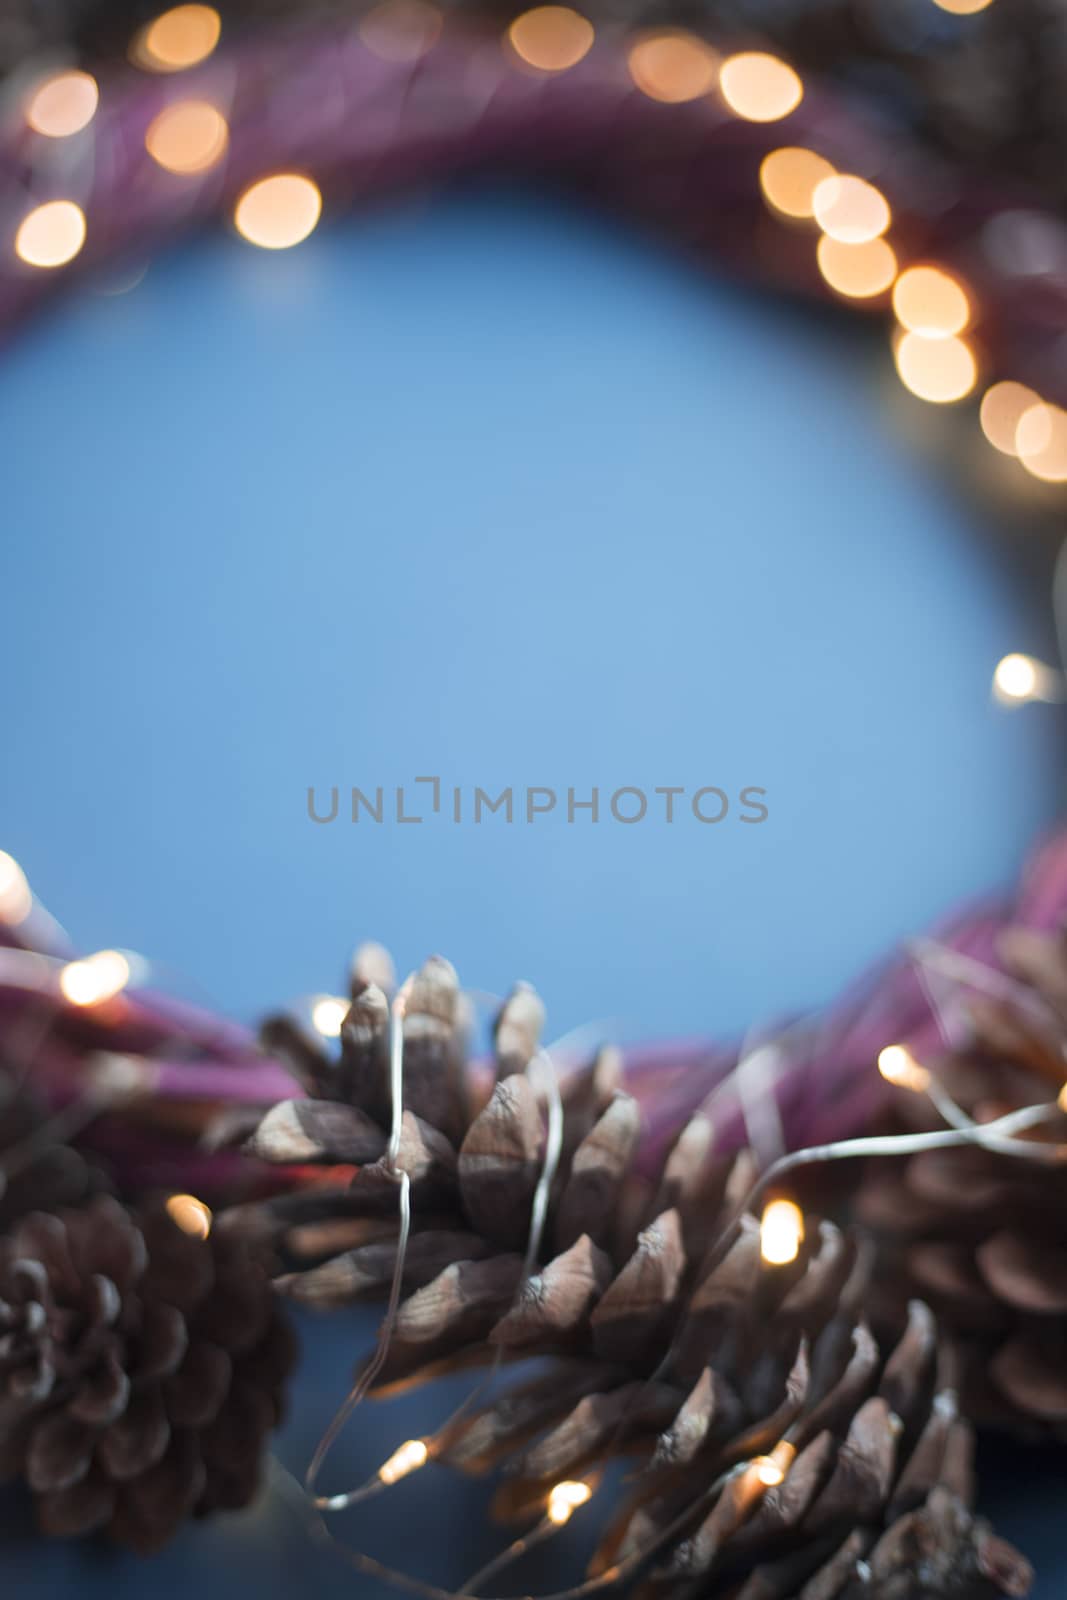 Christmas wreath background by destillat